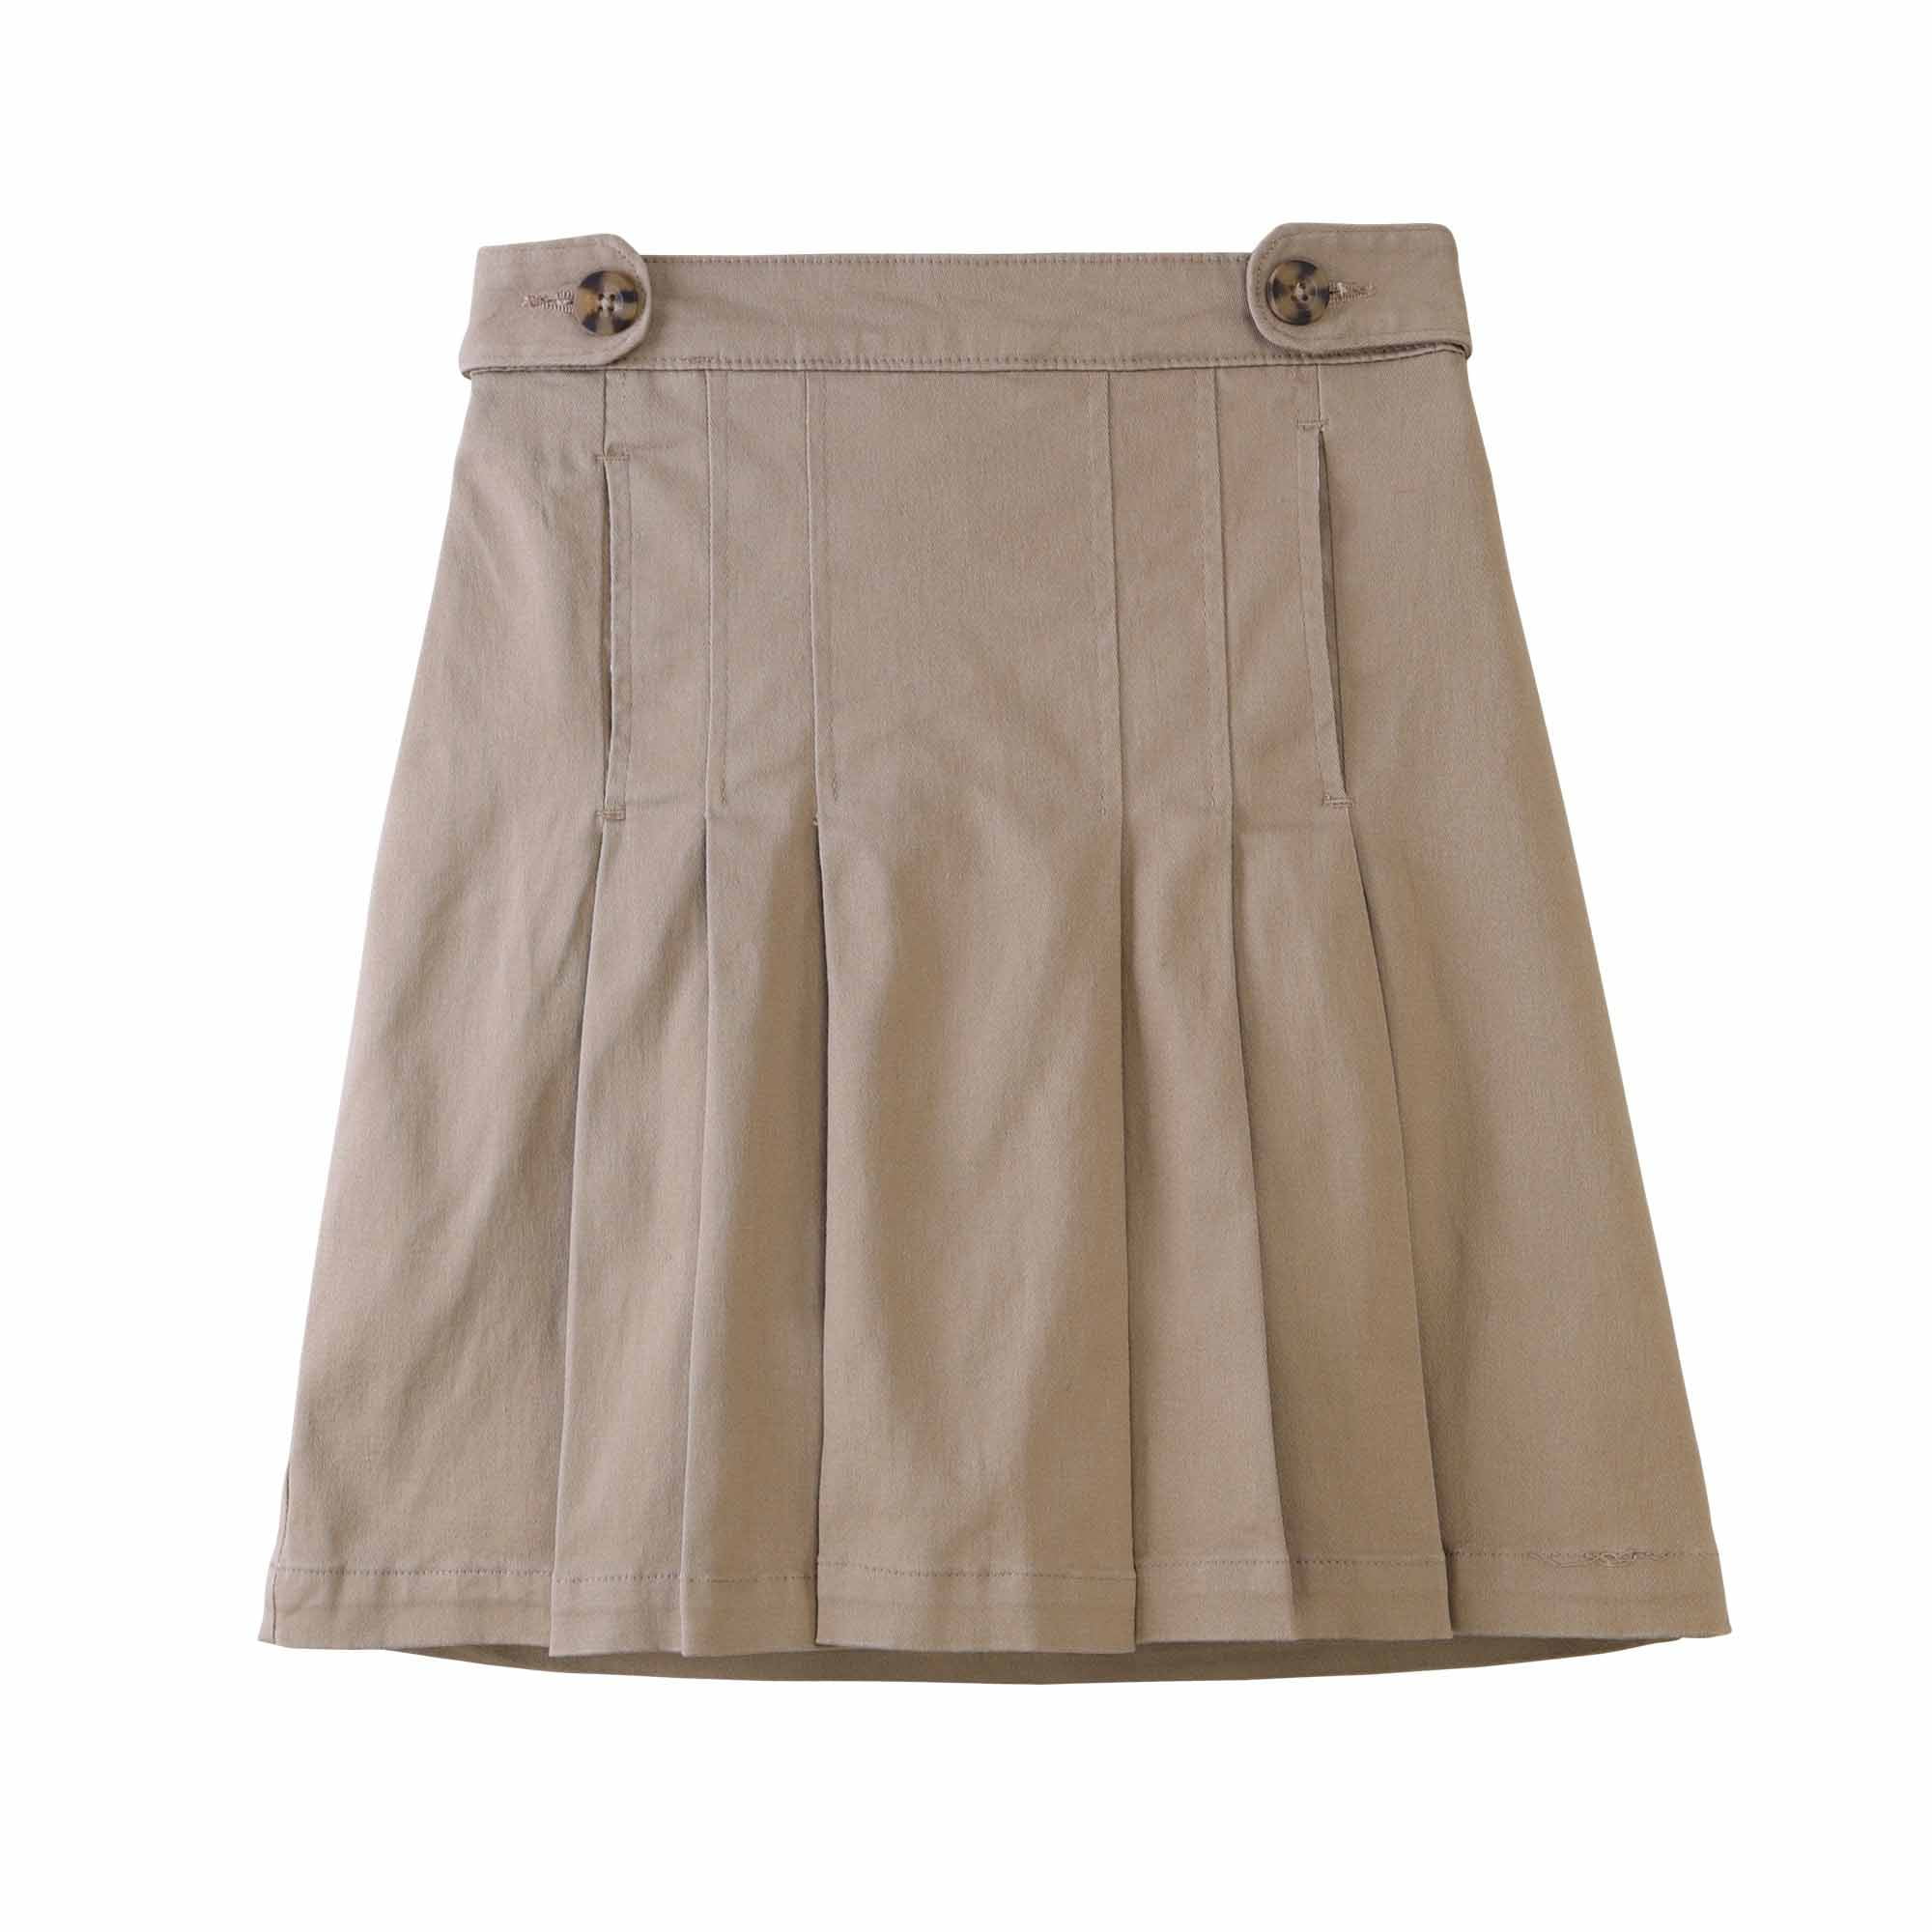 Bienzoe Girl's Cotton Stretchy School Uniforms Pleated Skirt 